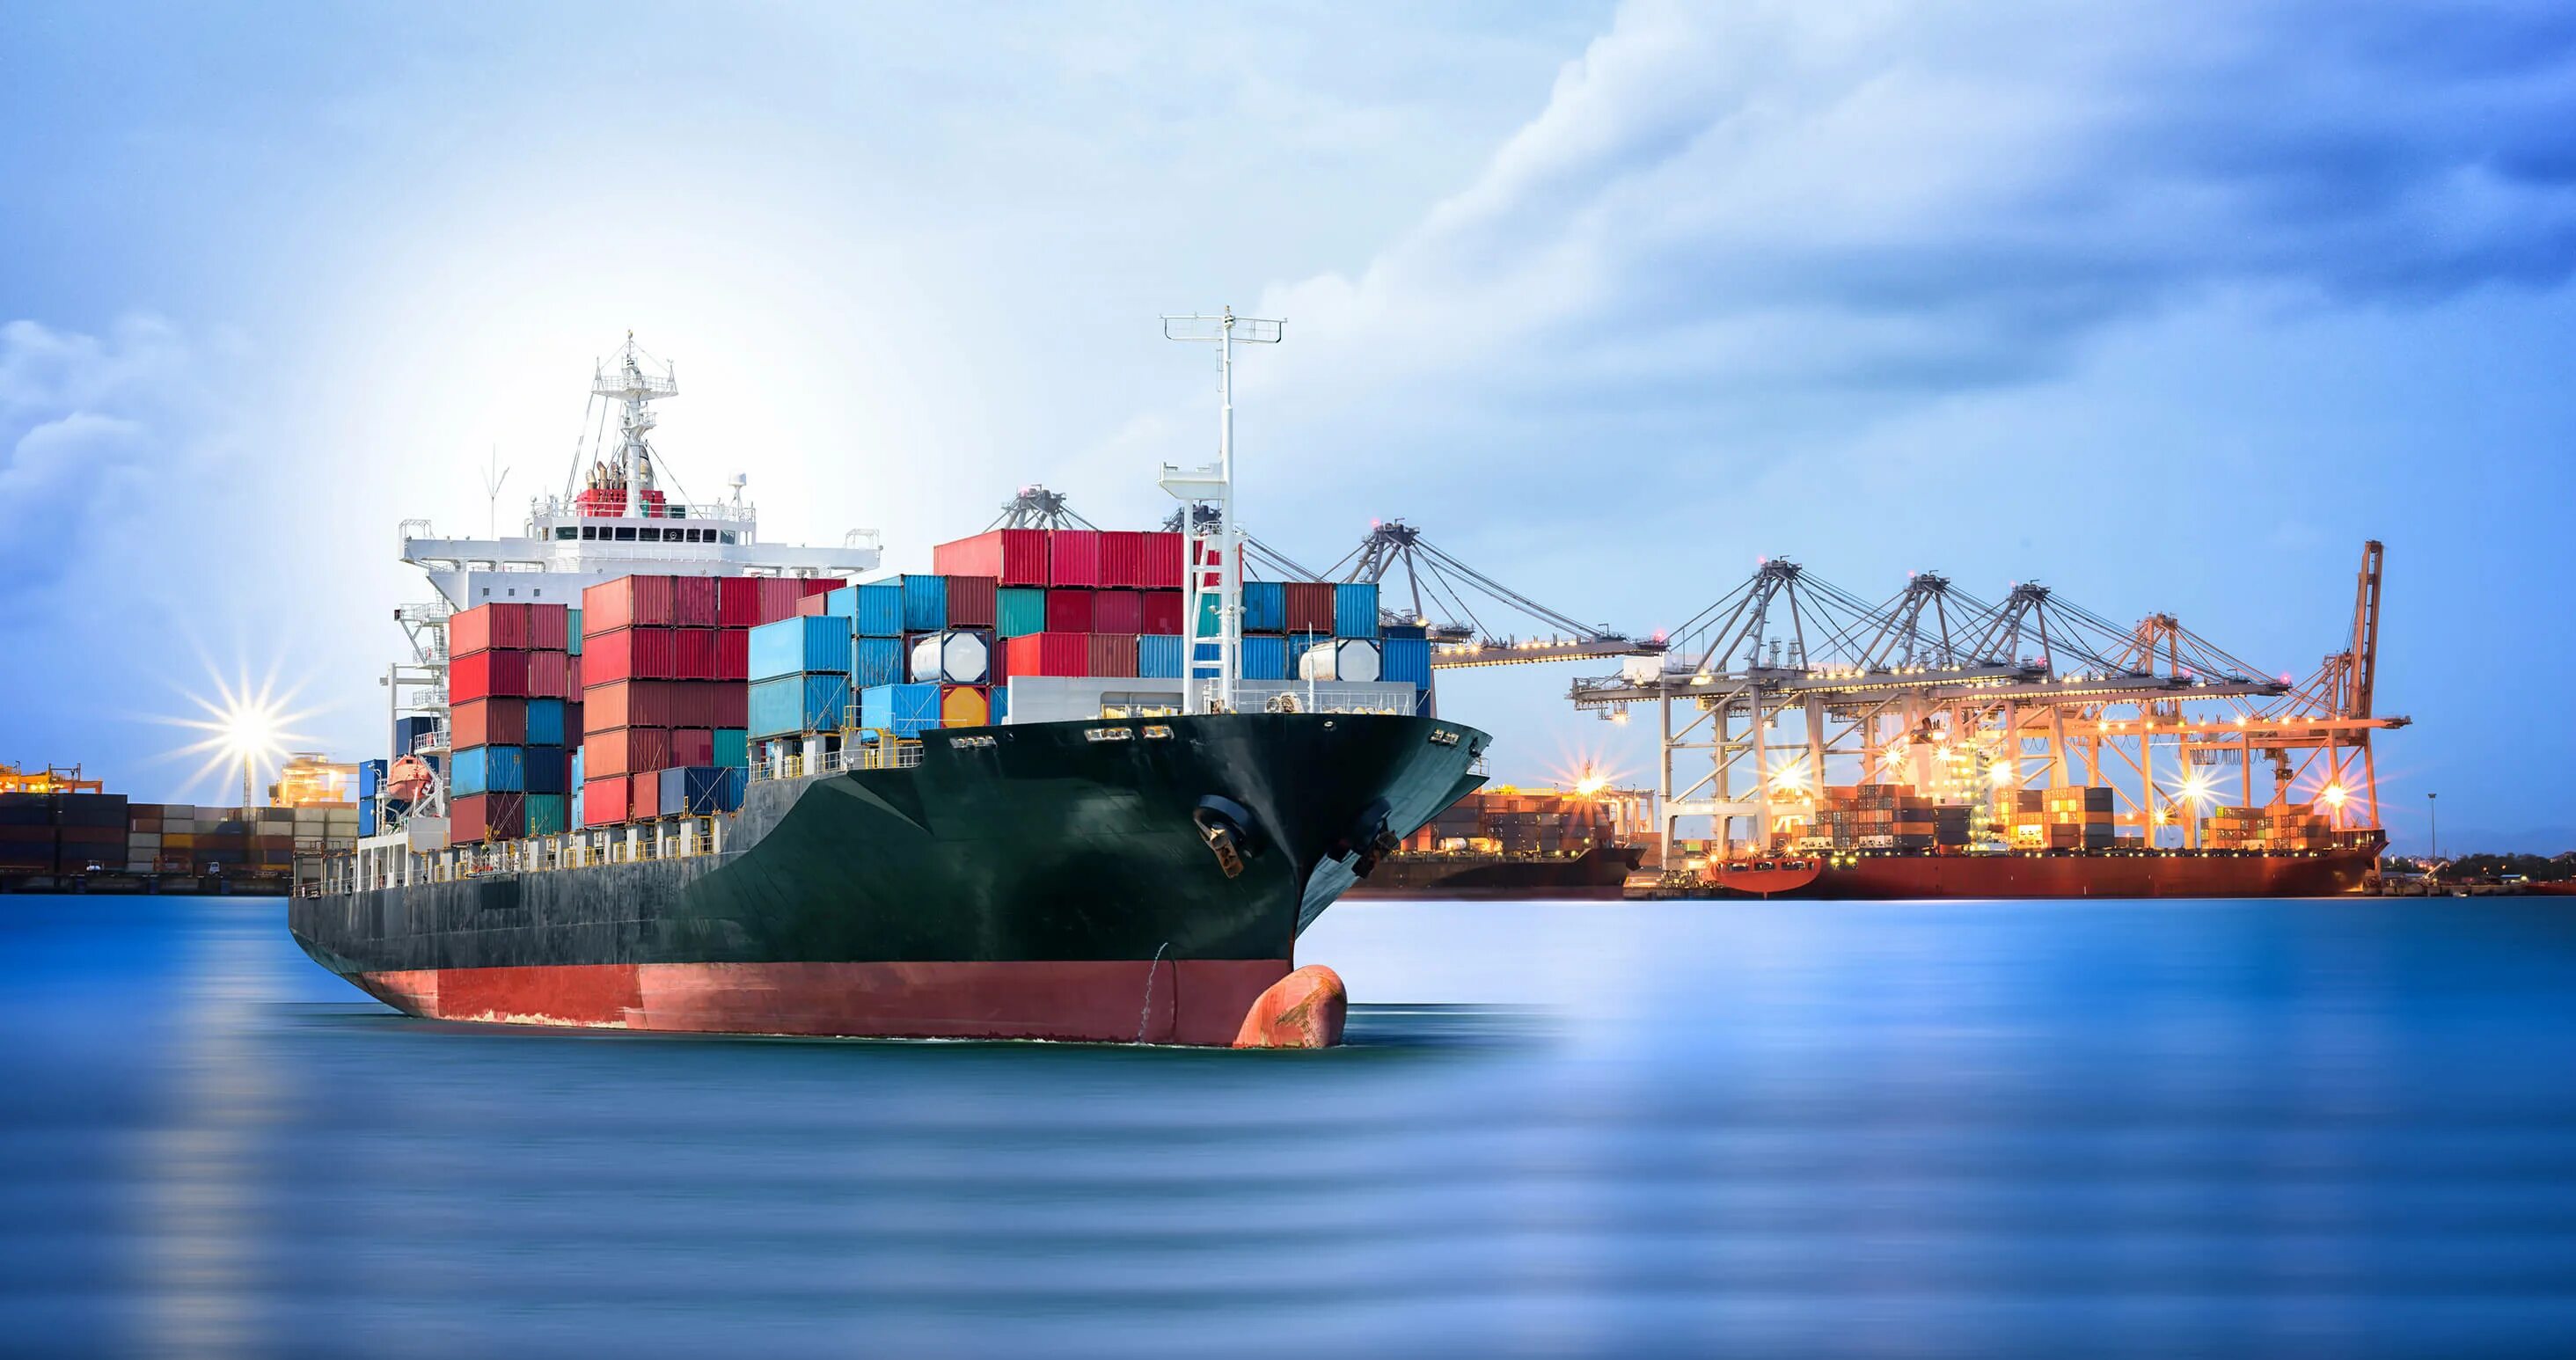 Судно коллектор. Судно Ситрин. Доставка. Surbana Jurong. Indian Ocean shipping Routes trade Logistics.